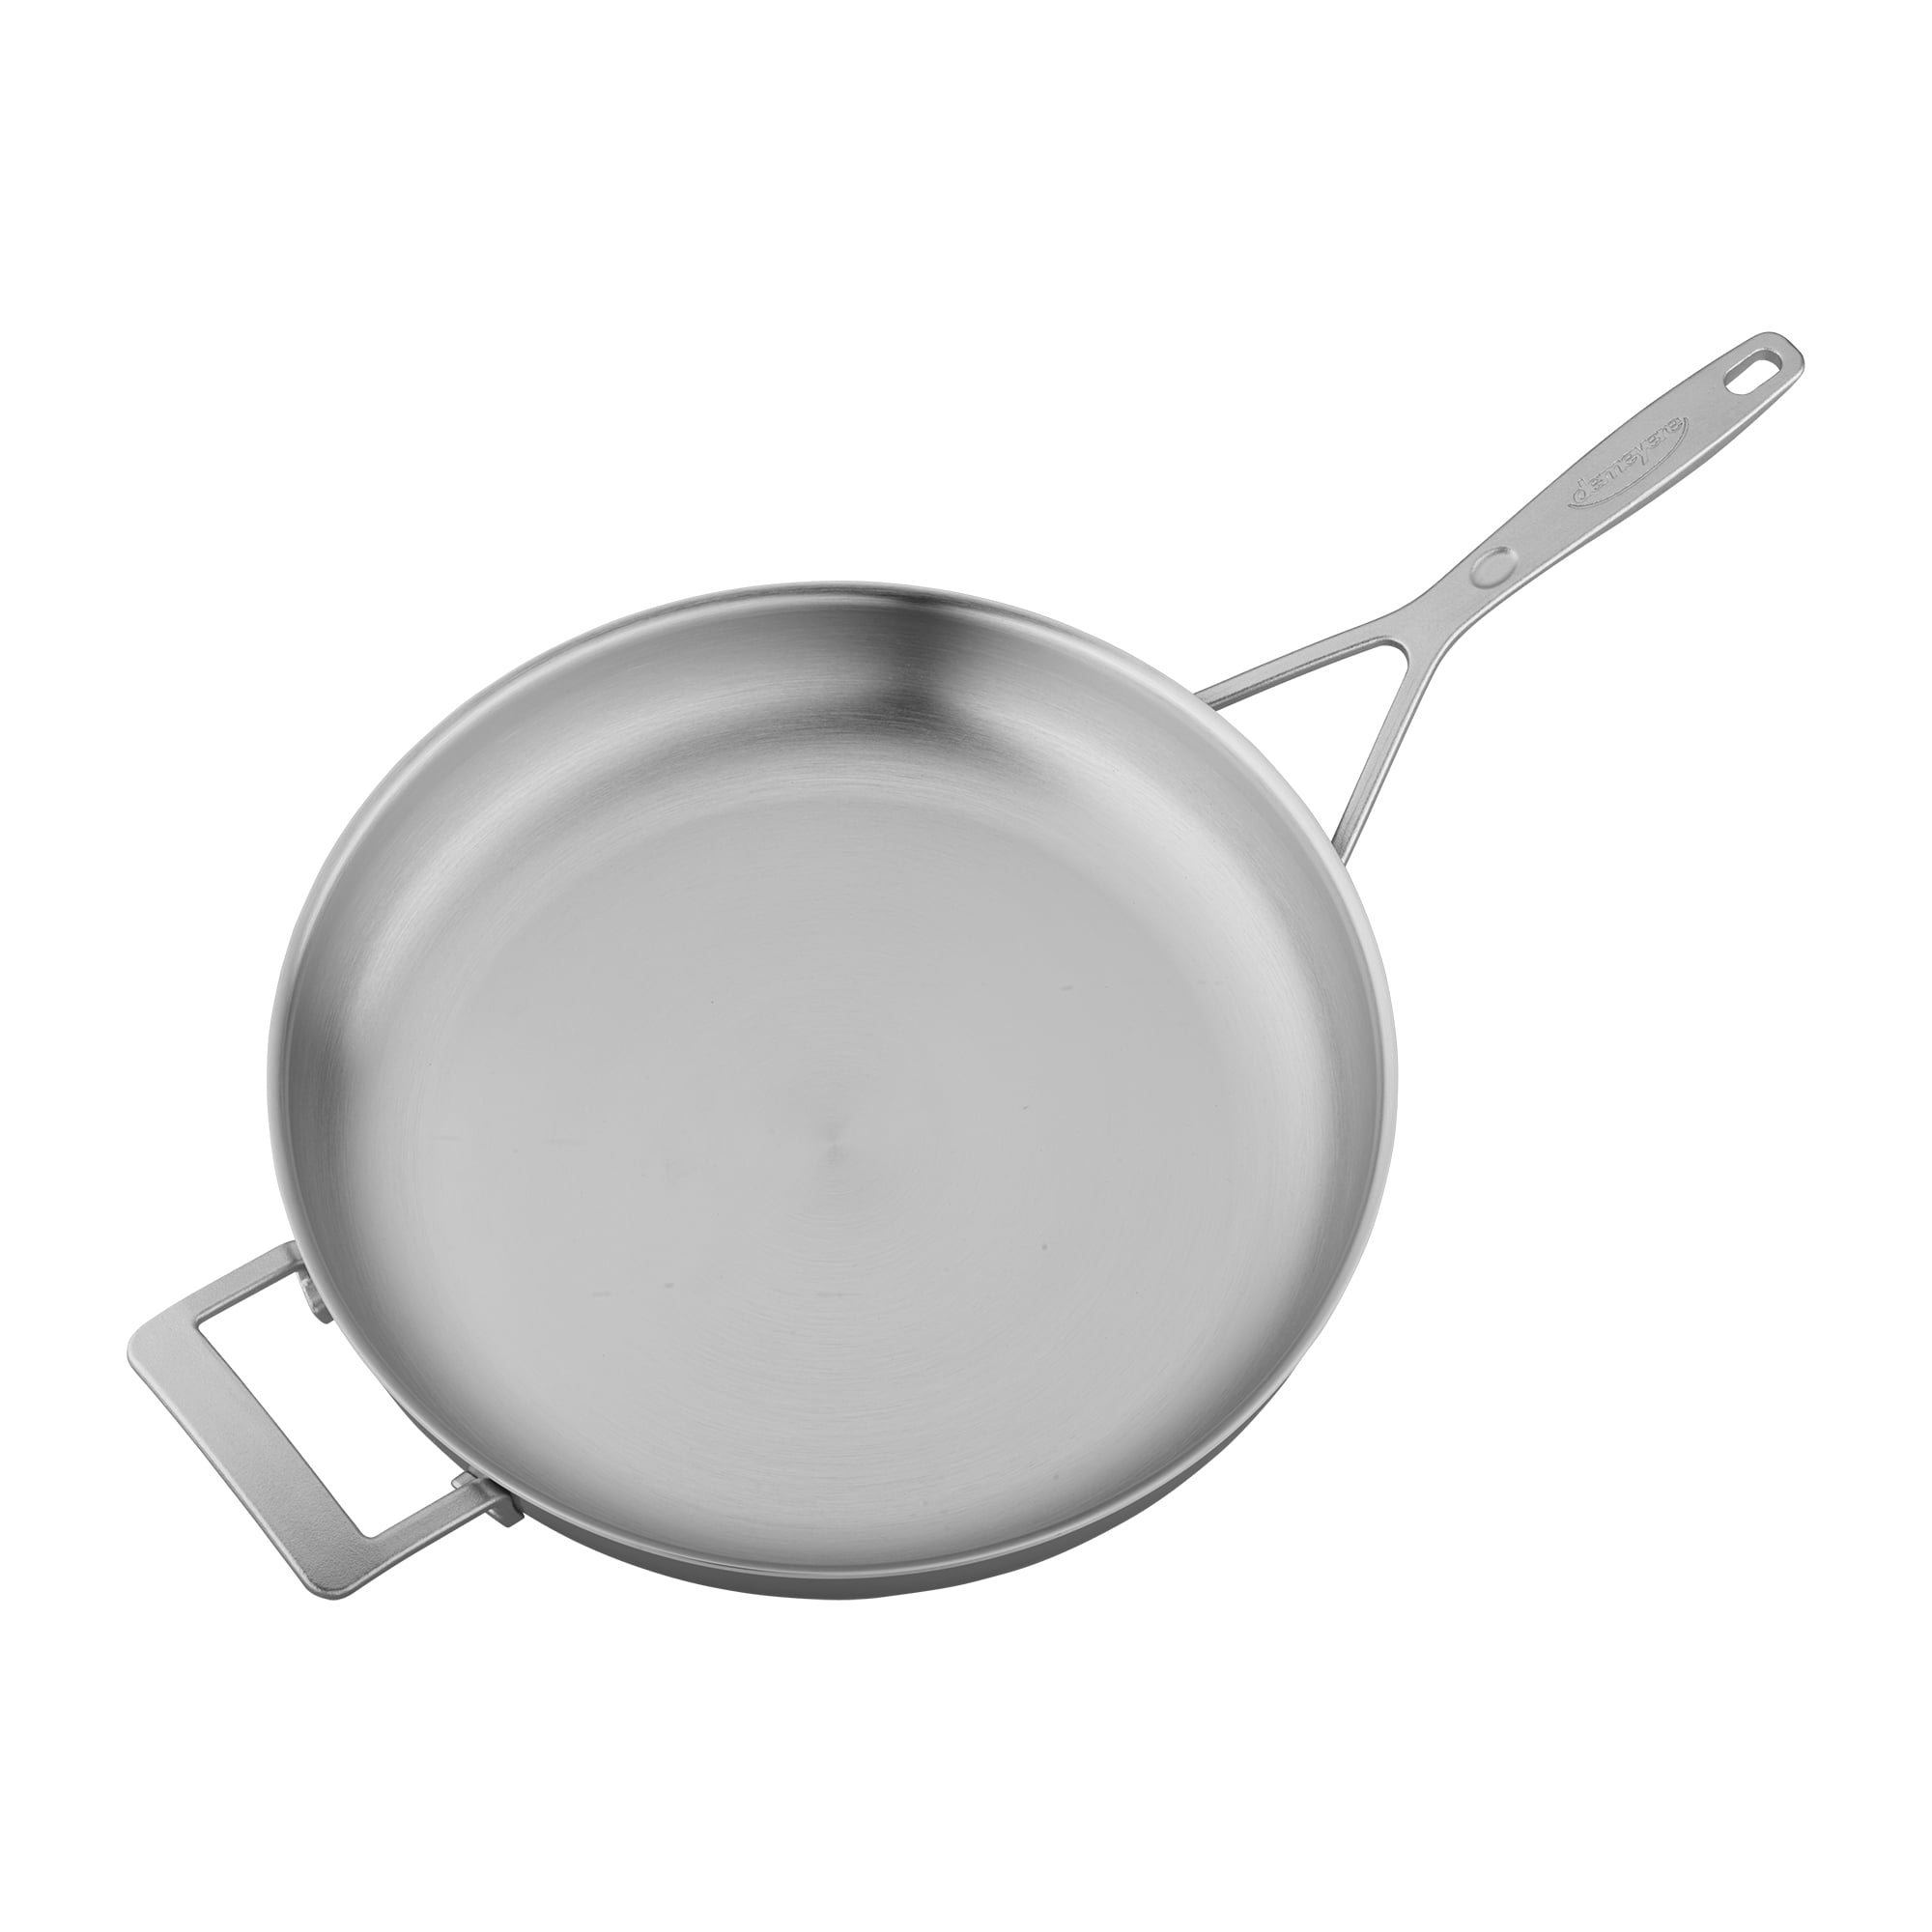 Demeyere Industry 10-inch Searing Pan, 10-inch - Ralphs